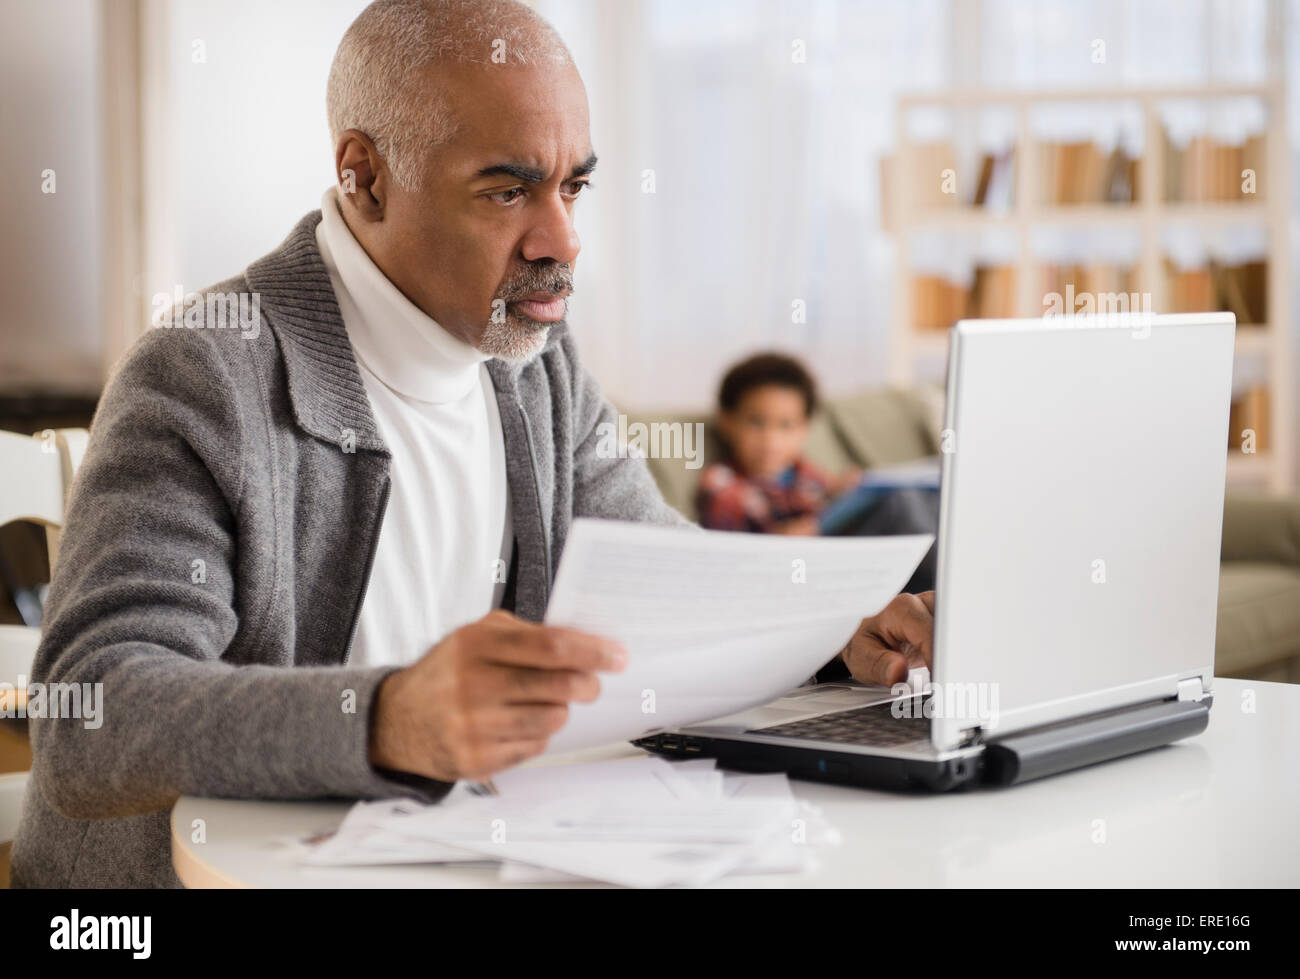 Mixed race man paying bills on laptop Stock Photo